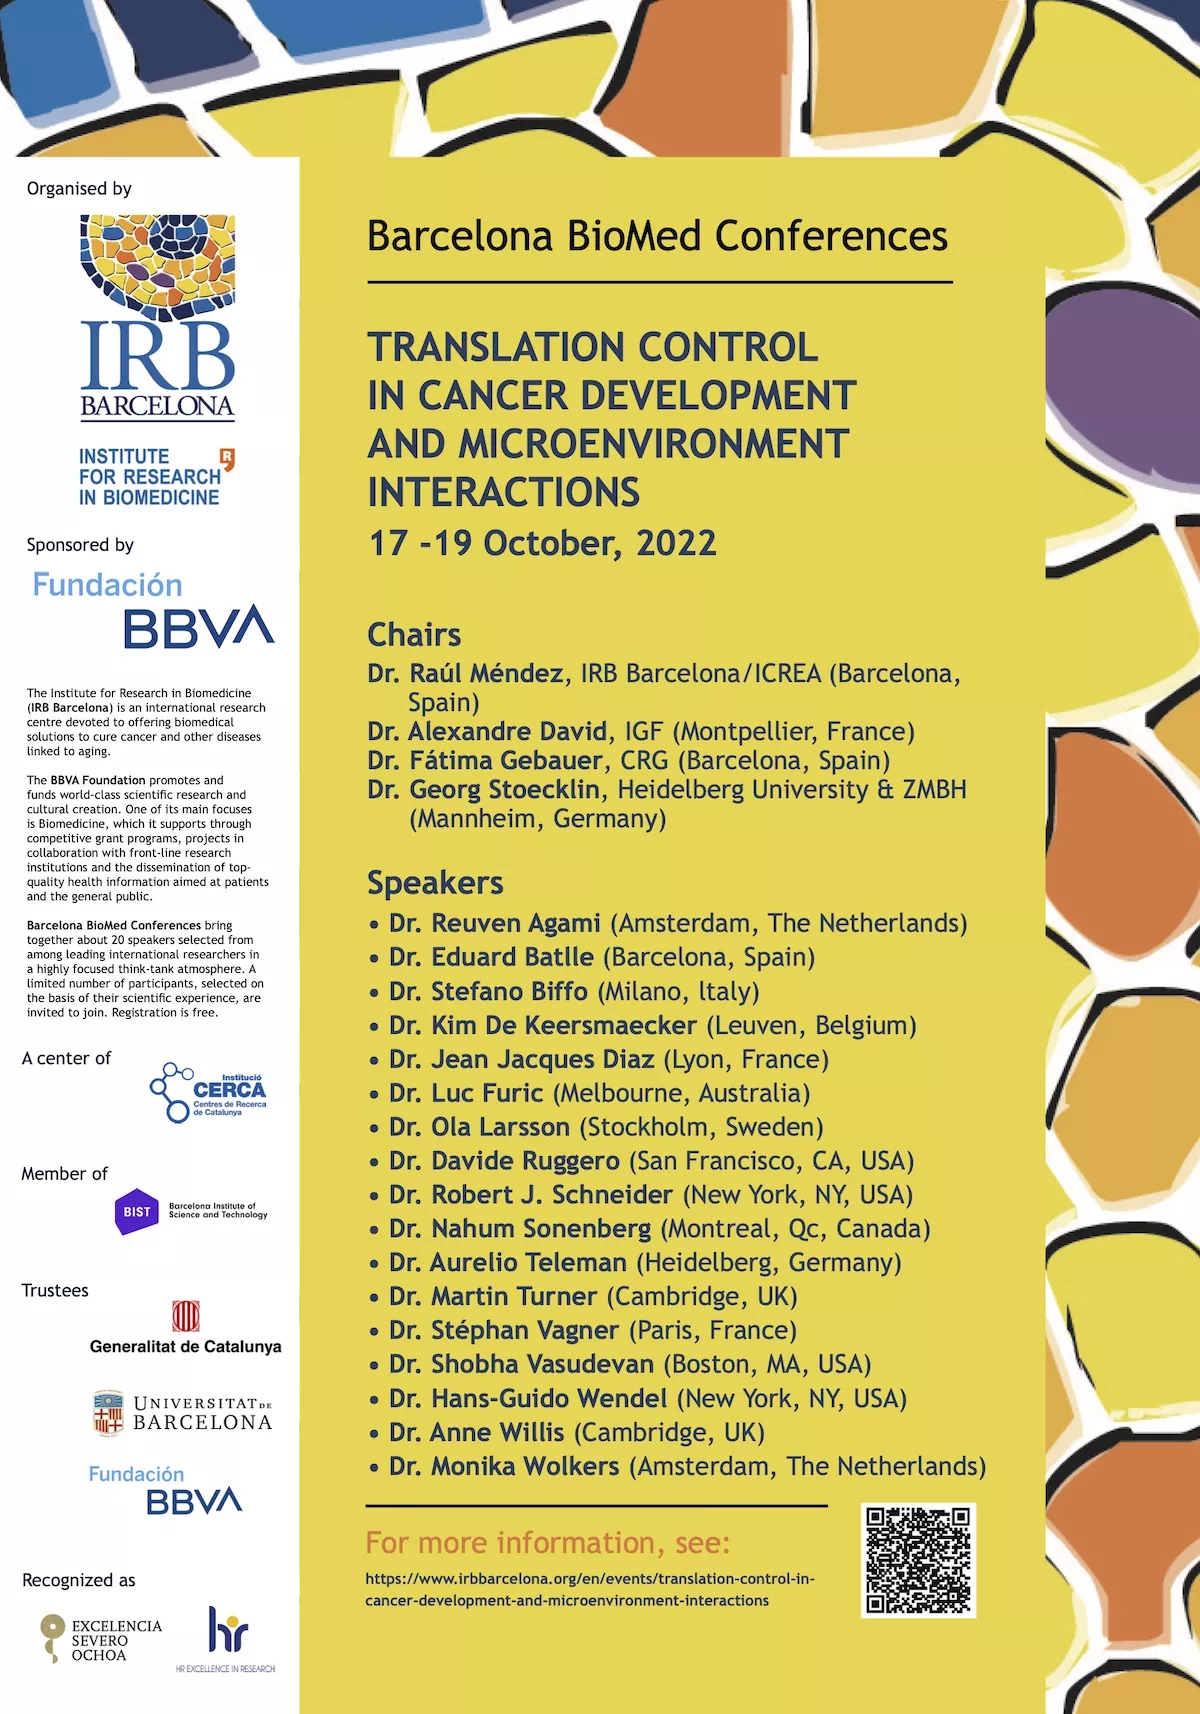 Translation control in cancer development